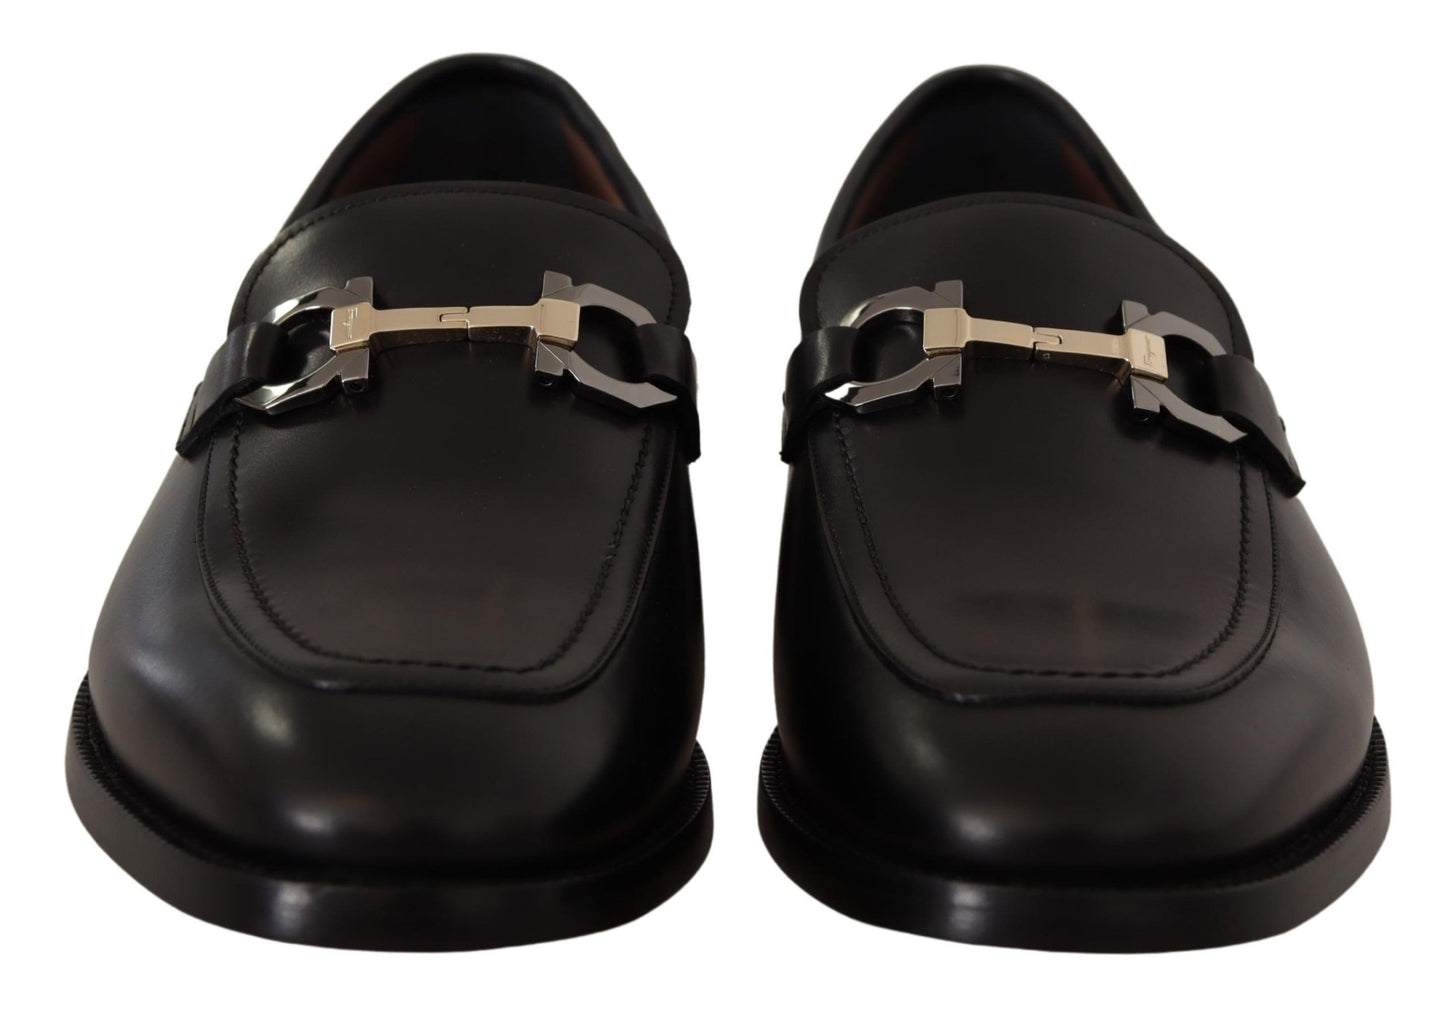 Salvatore Ferragamo Black Calf Leather Moccasin Formal Shoes